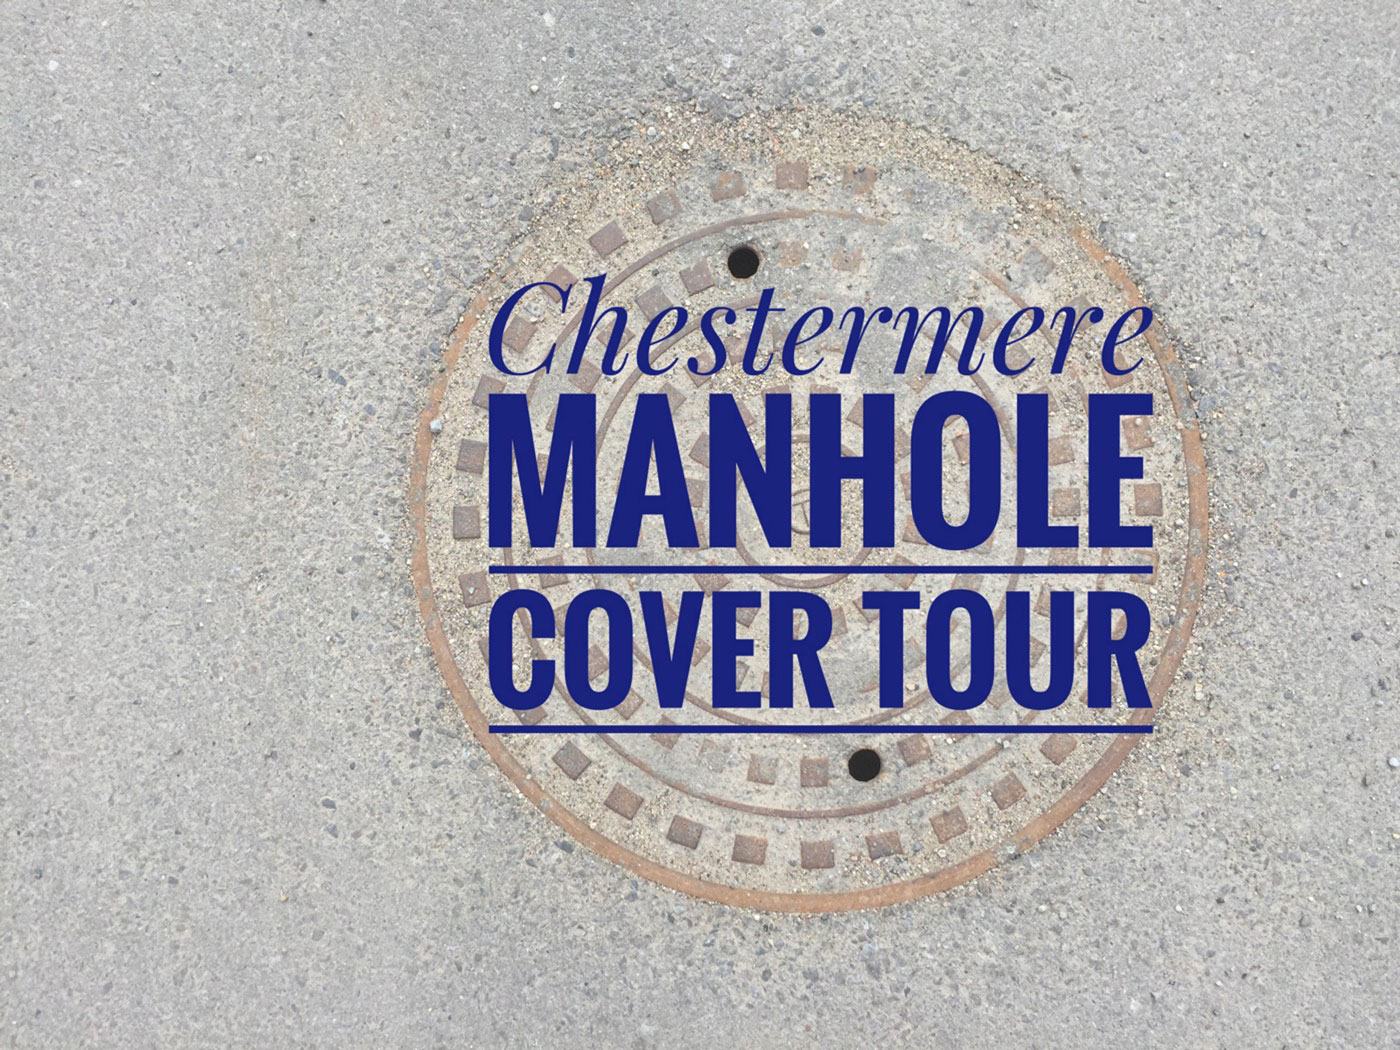 chester-mirror-manhole